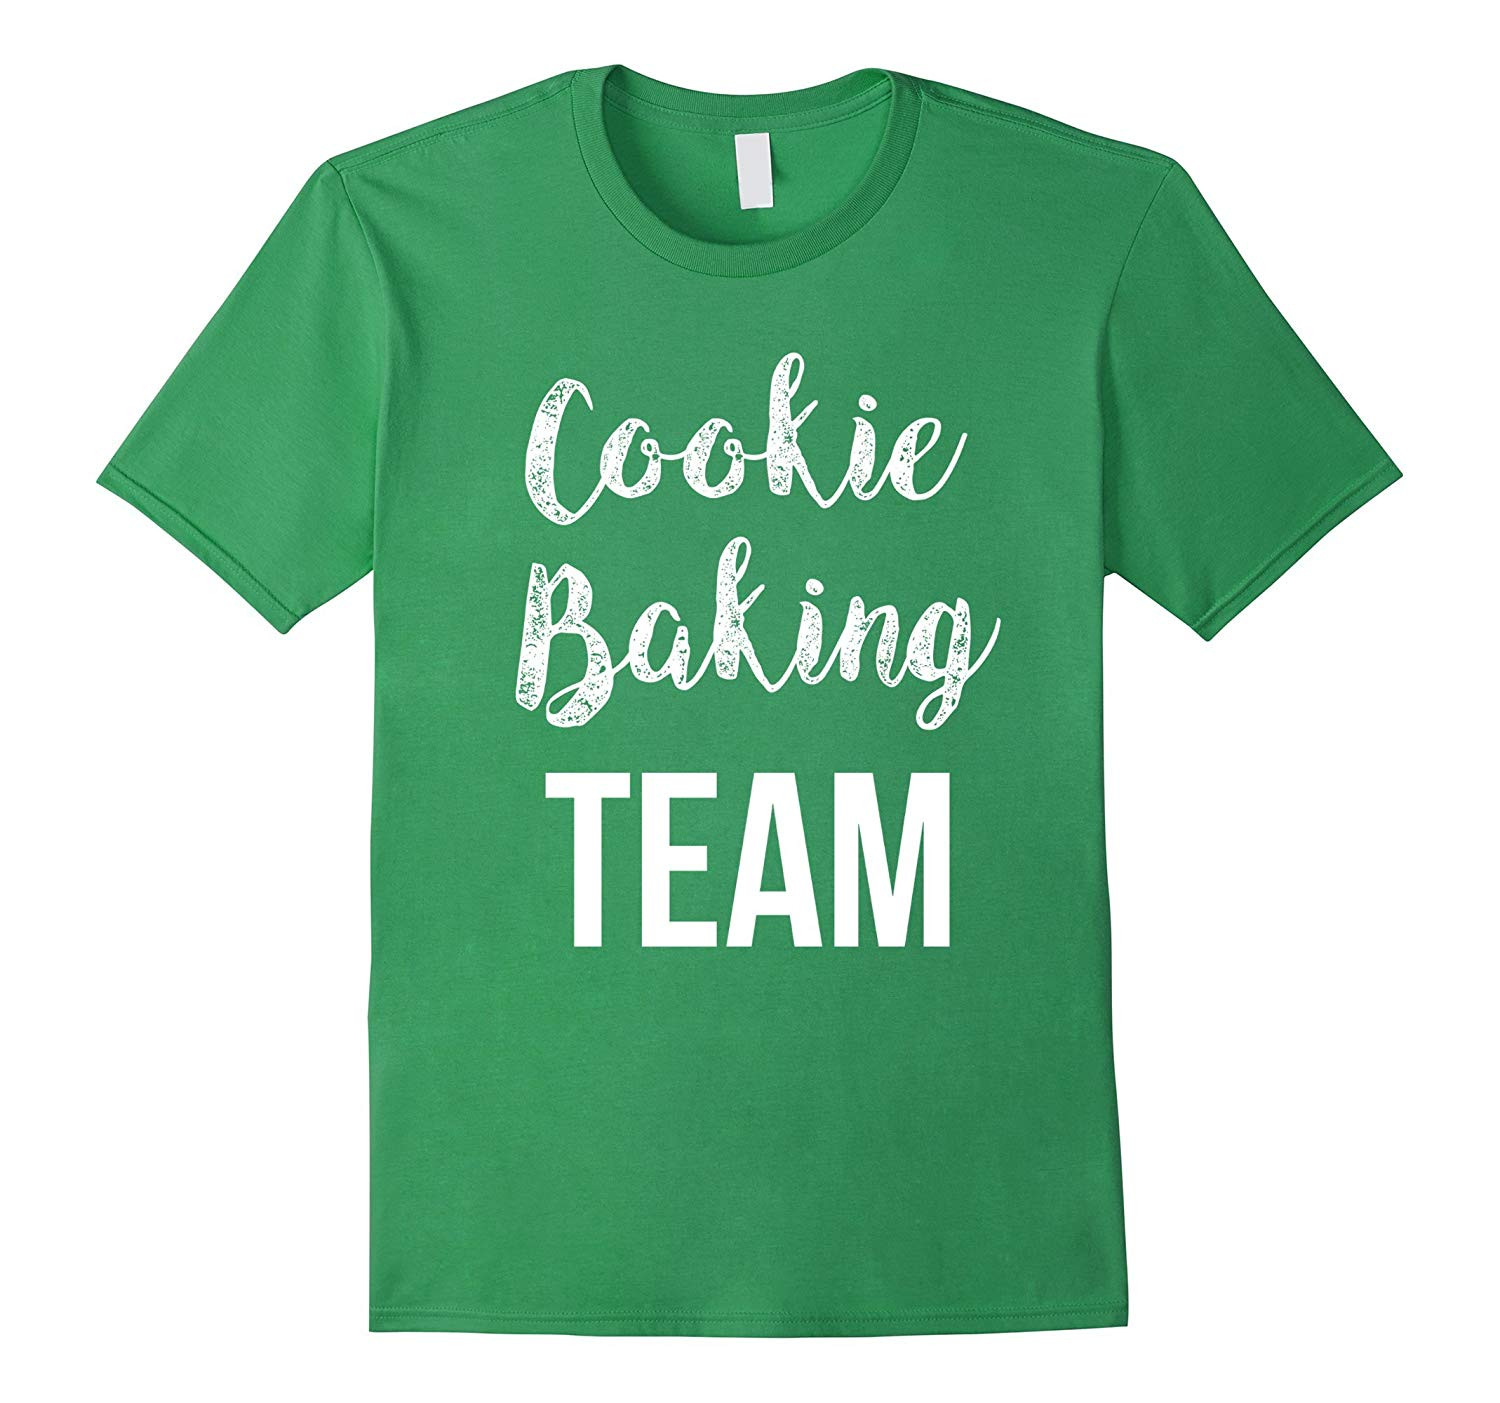 Christmas Baking Shirts
 Cookie Baking Team Funny Christmas T Shirt TD – Teedep